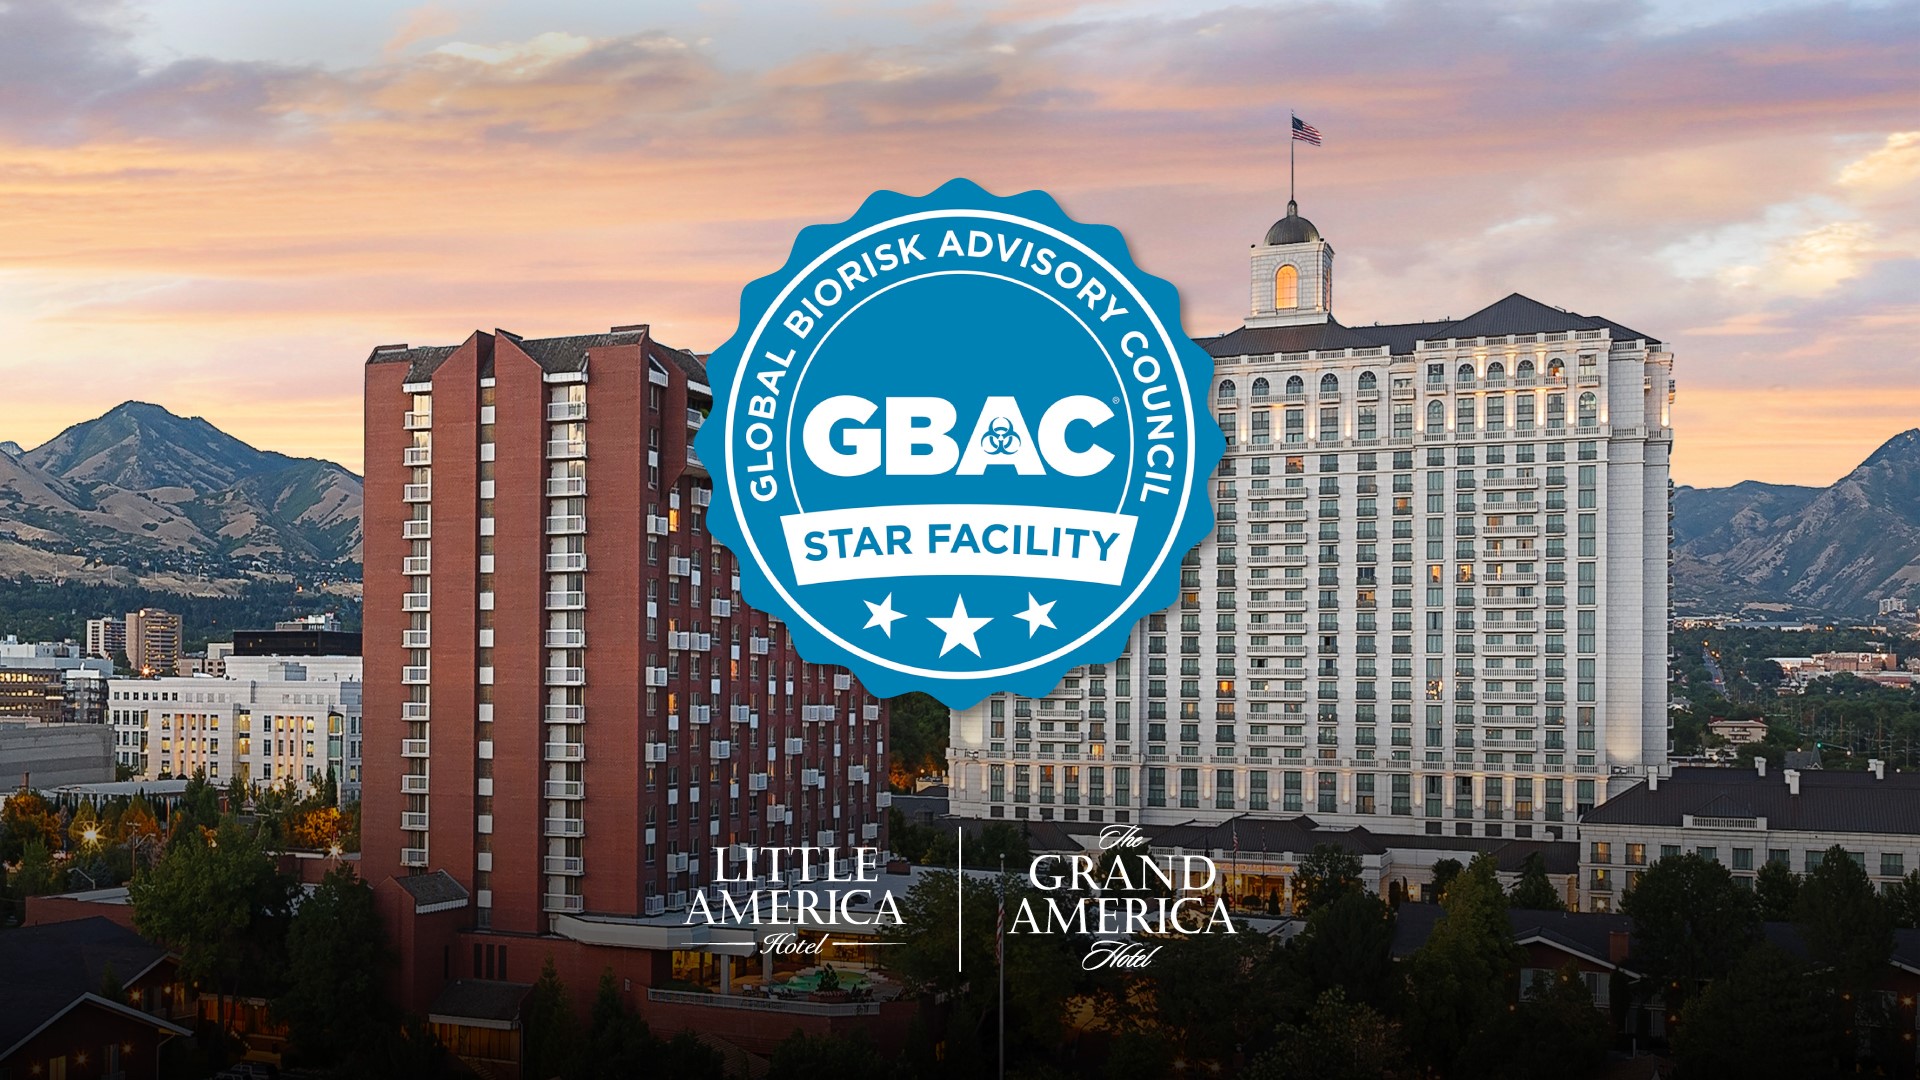 GBAC Star Facility award for The Grand America Hotel in Salt Lake City, Utah.